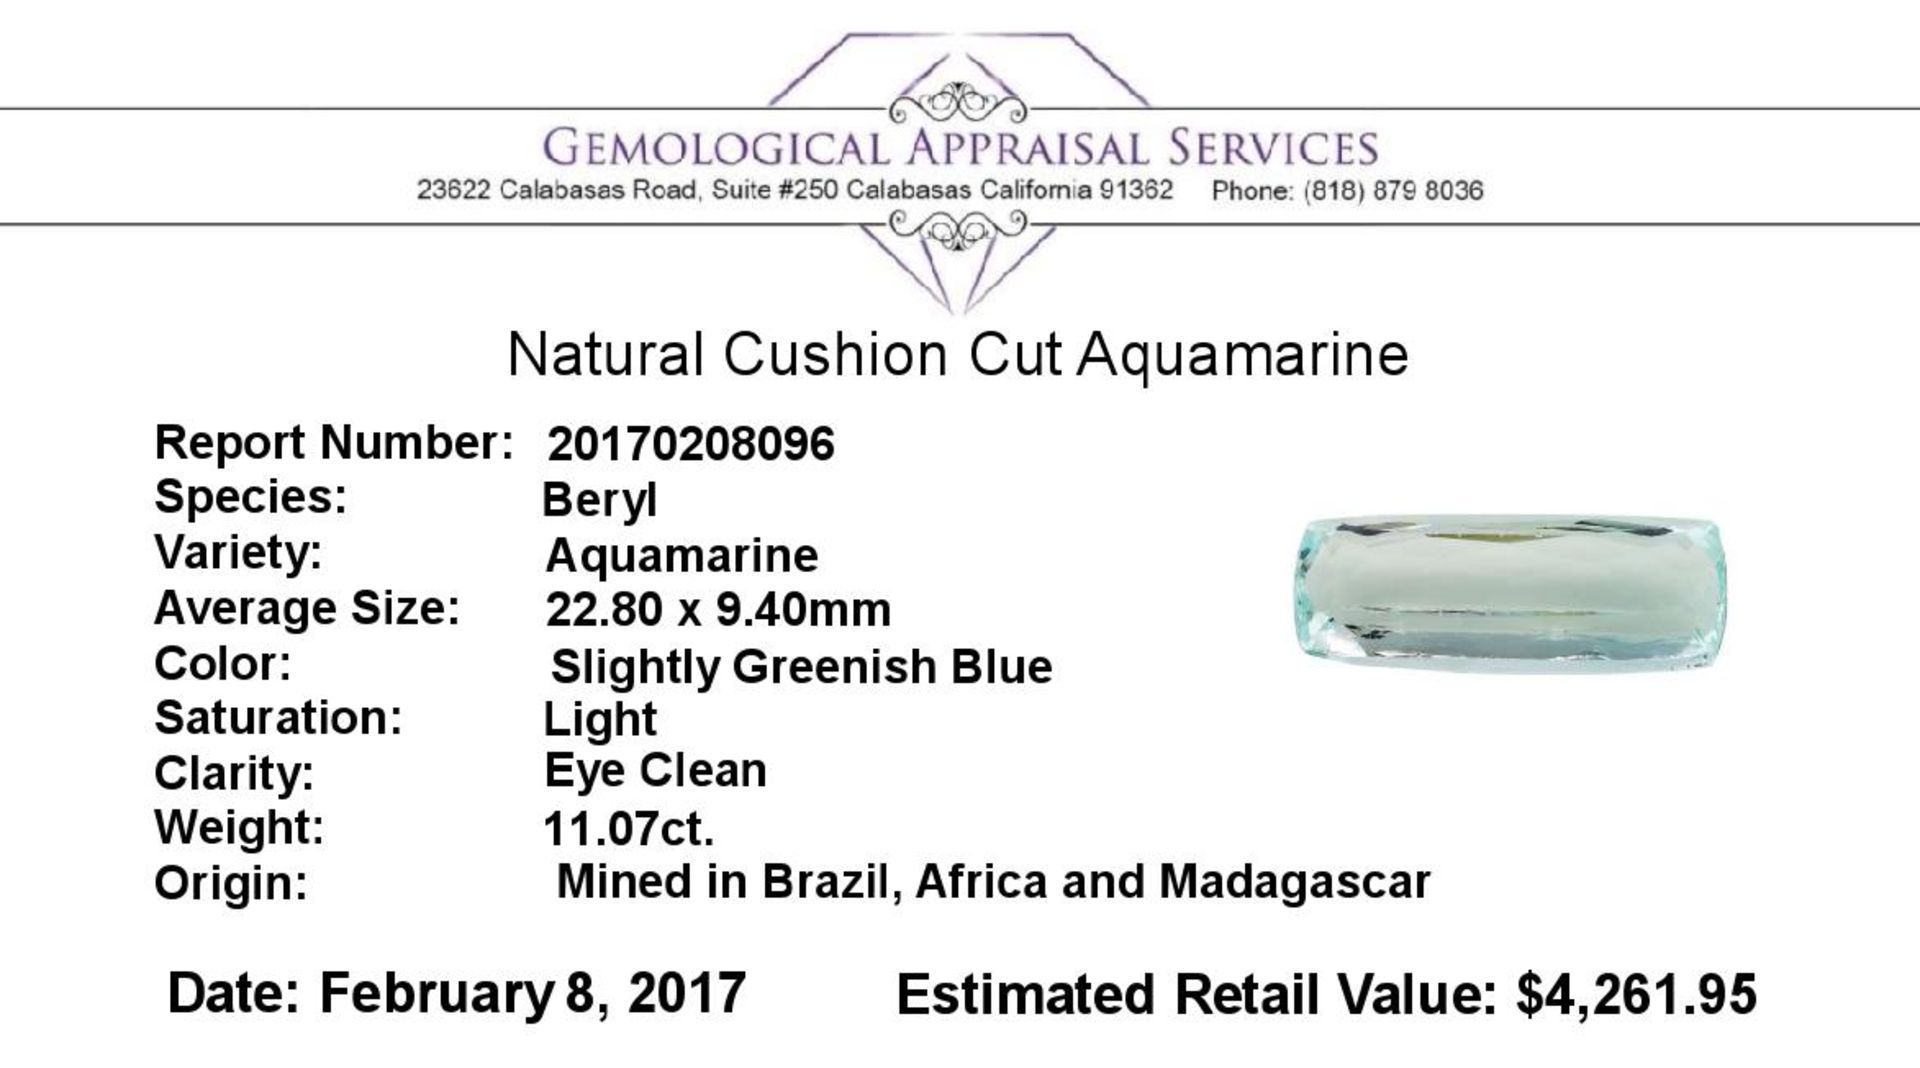 11.07 ct.Natural Cushion Cut Aquamarine - Image 2 of 2